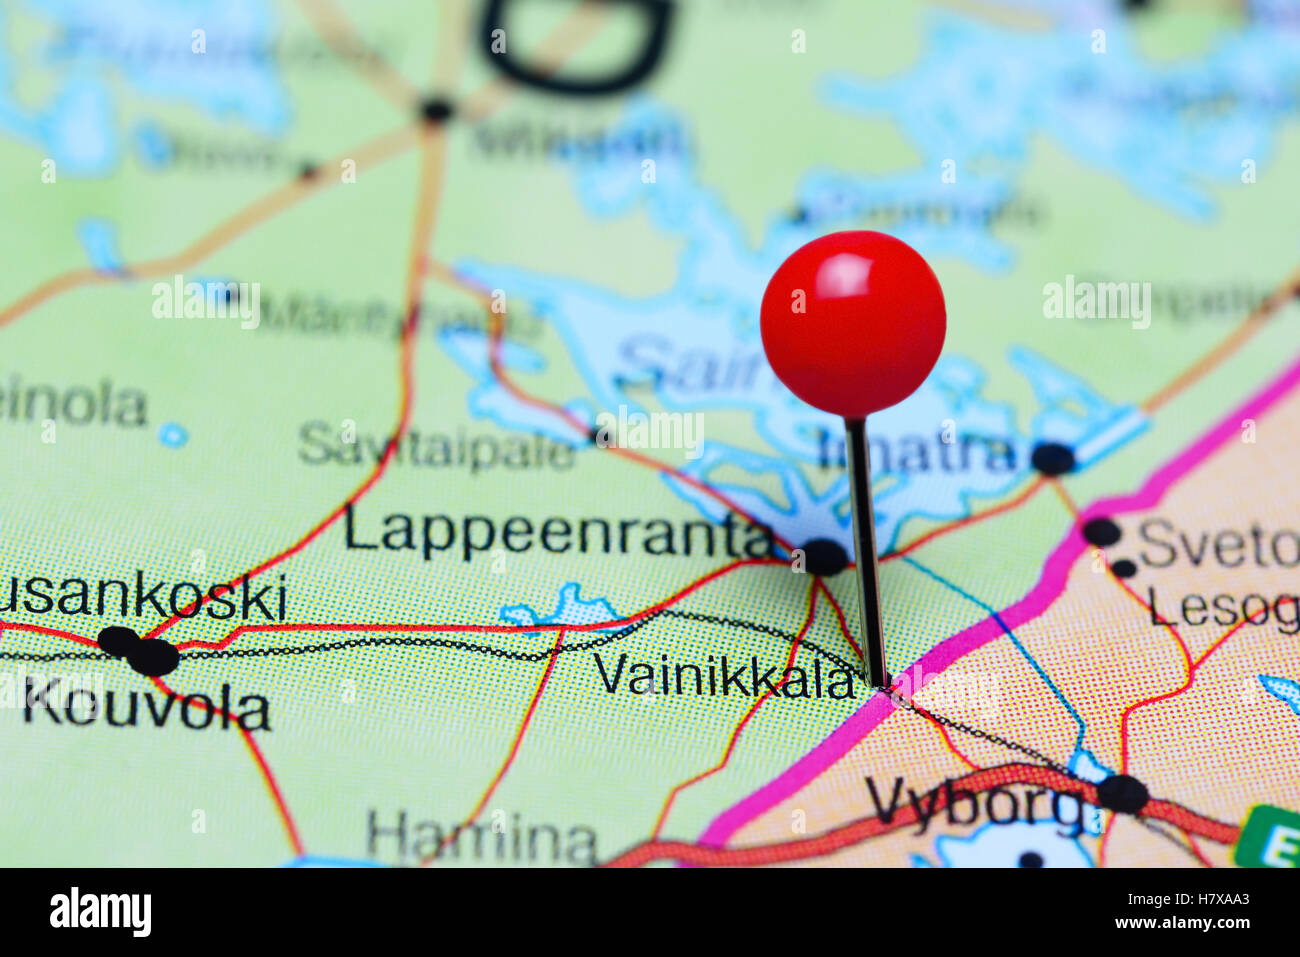 Vainikkala pinned on a map of Finland Stock Photo